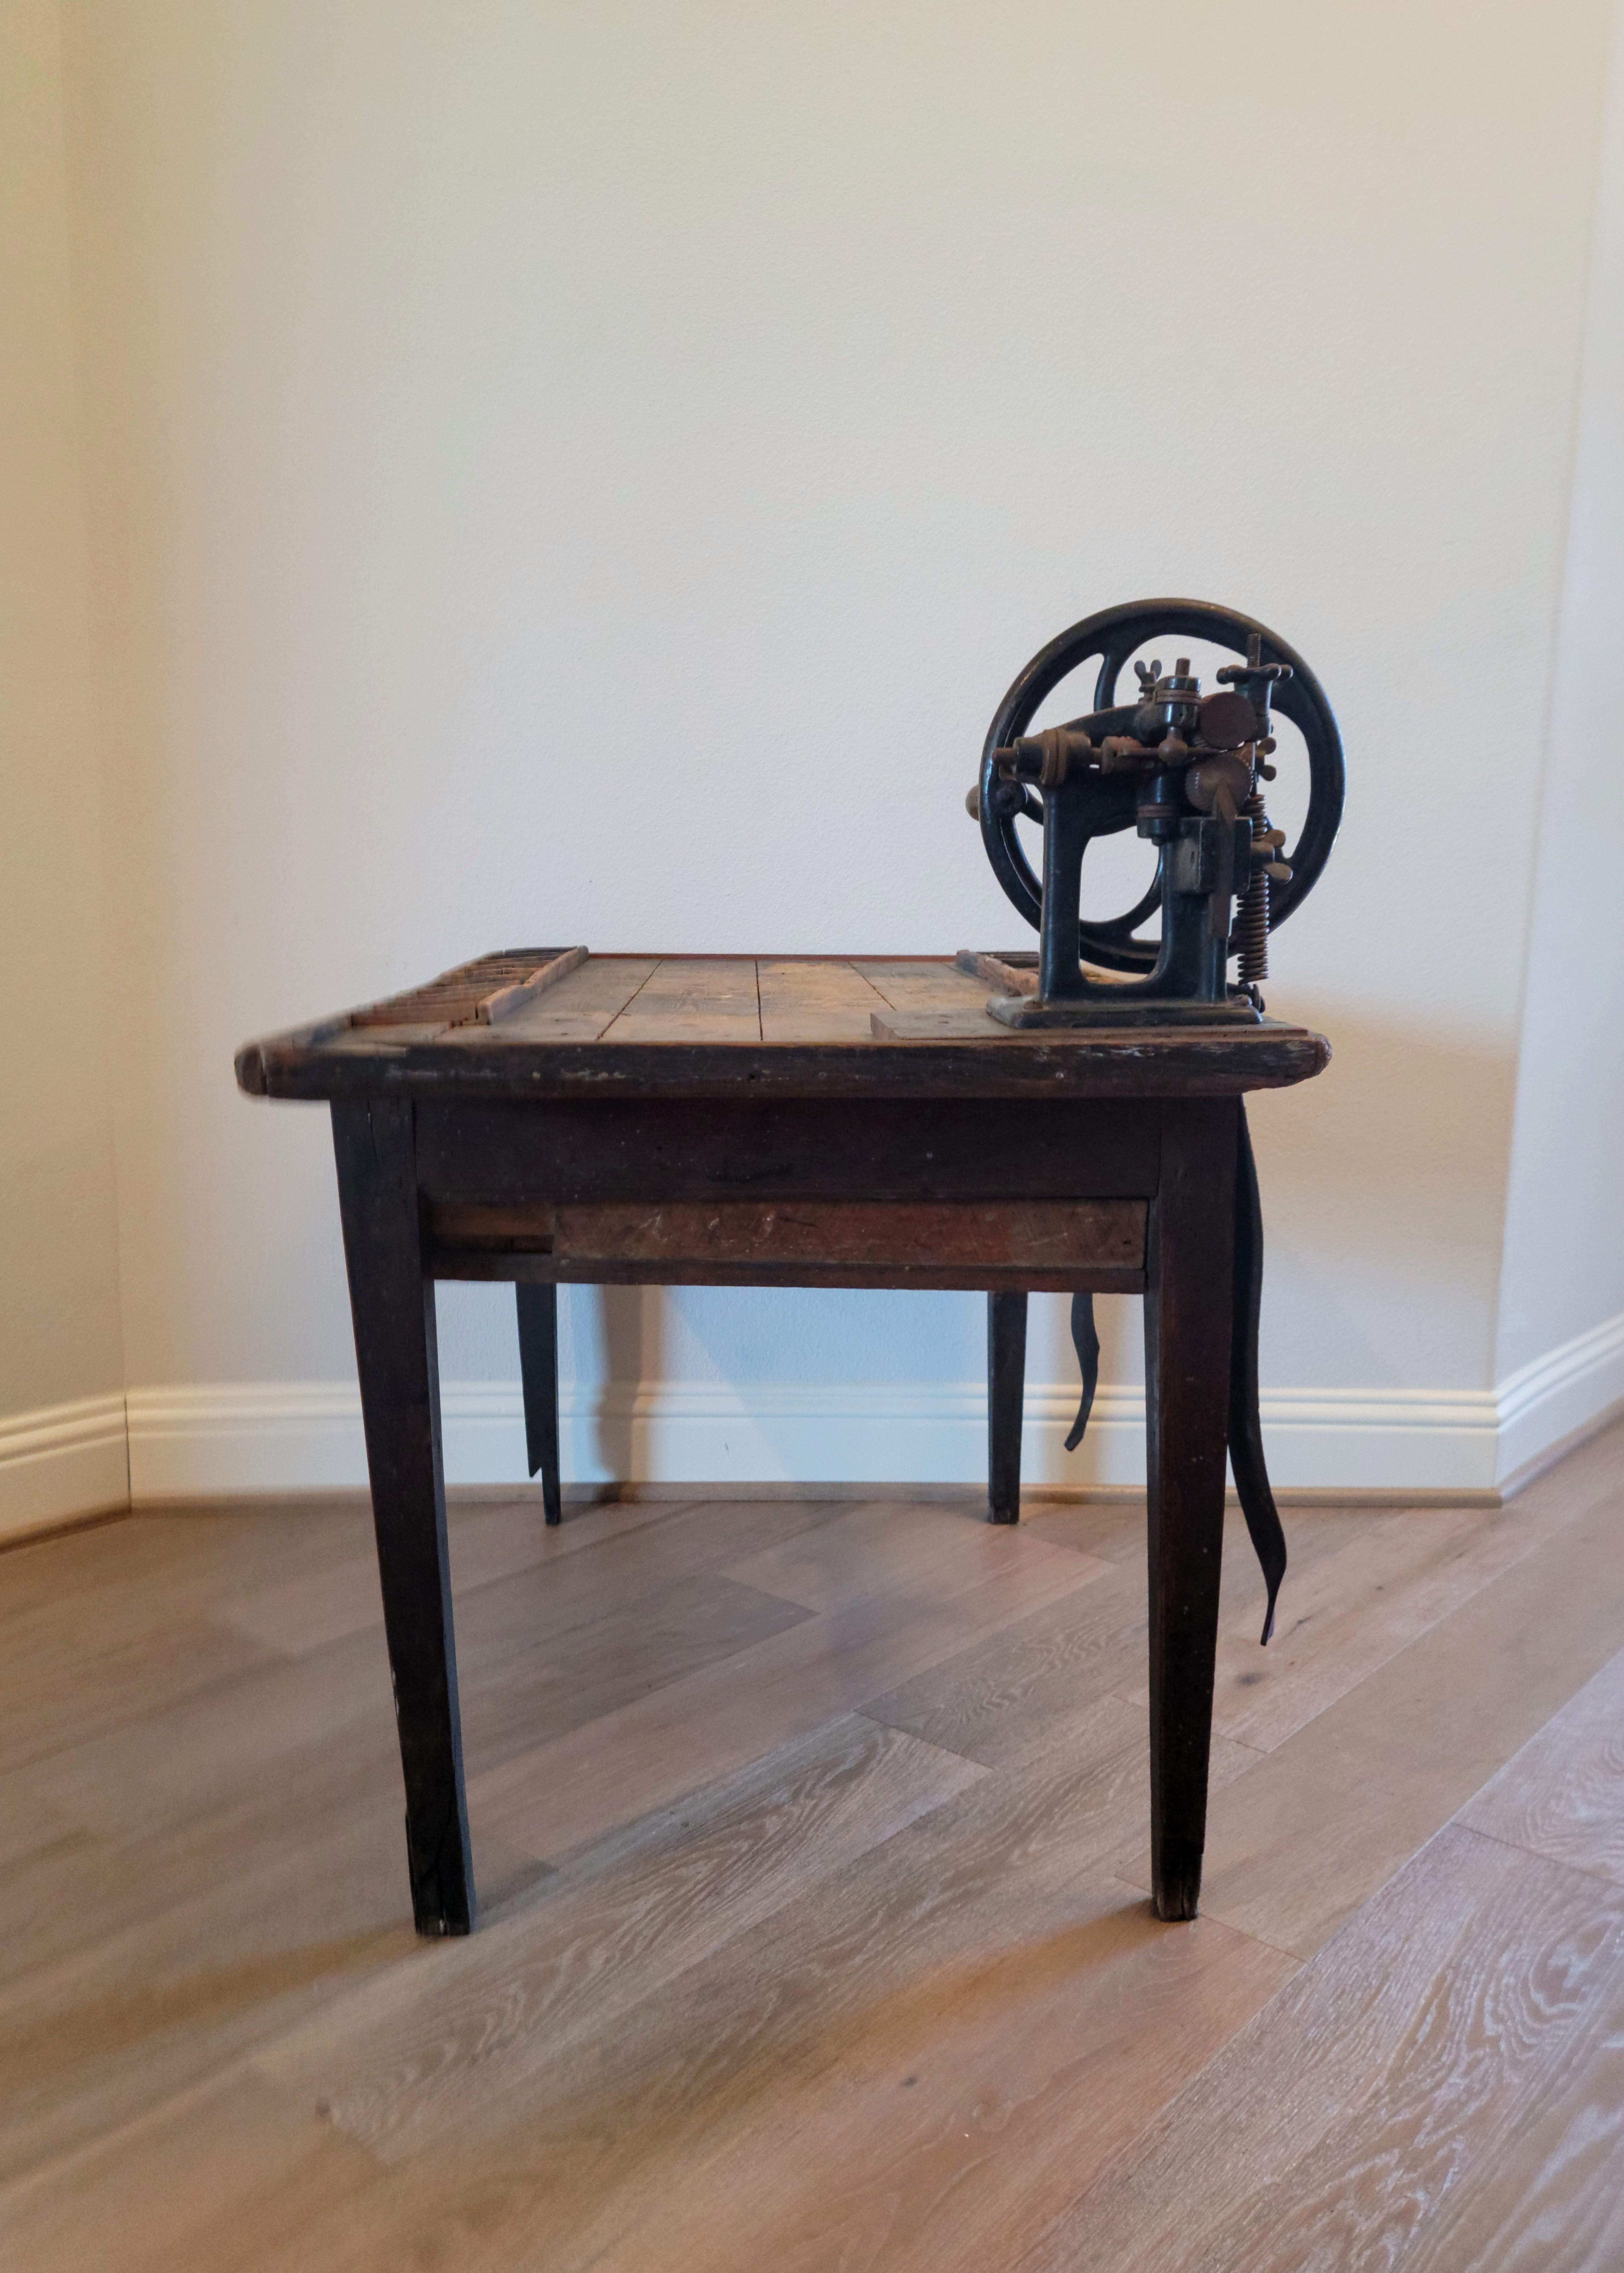 French Cobbler Leatherwork Shop Antique Industrial Craftsman Workbench Table 12